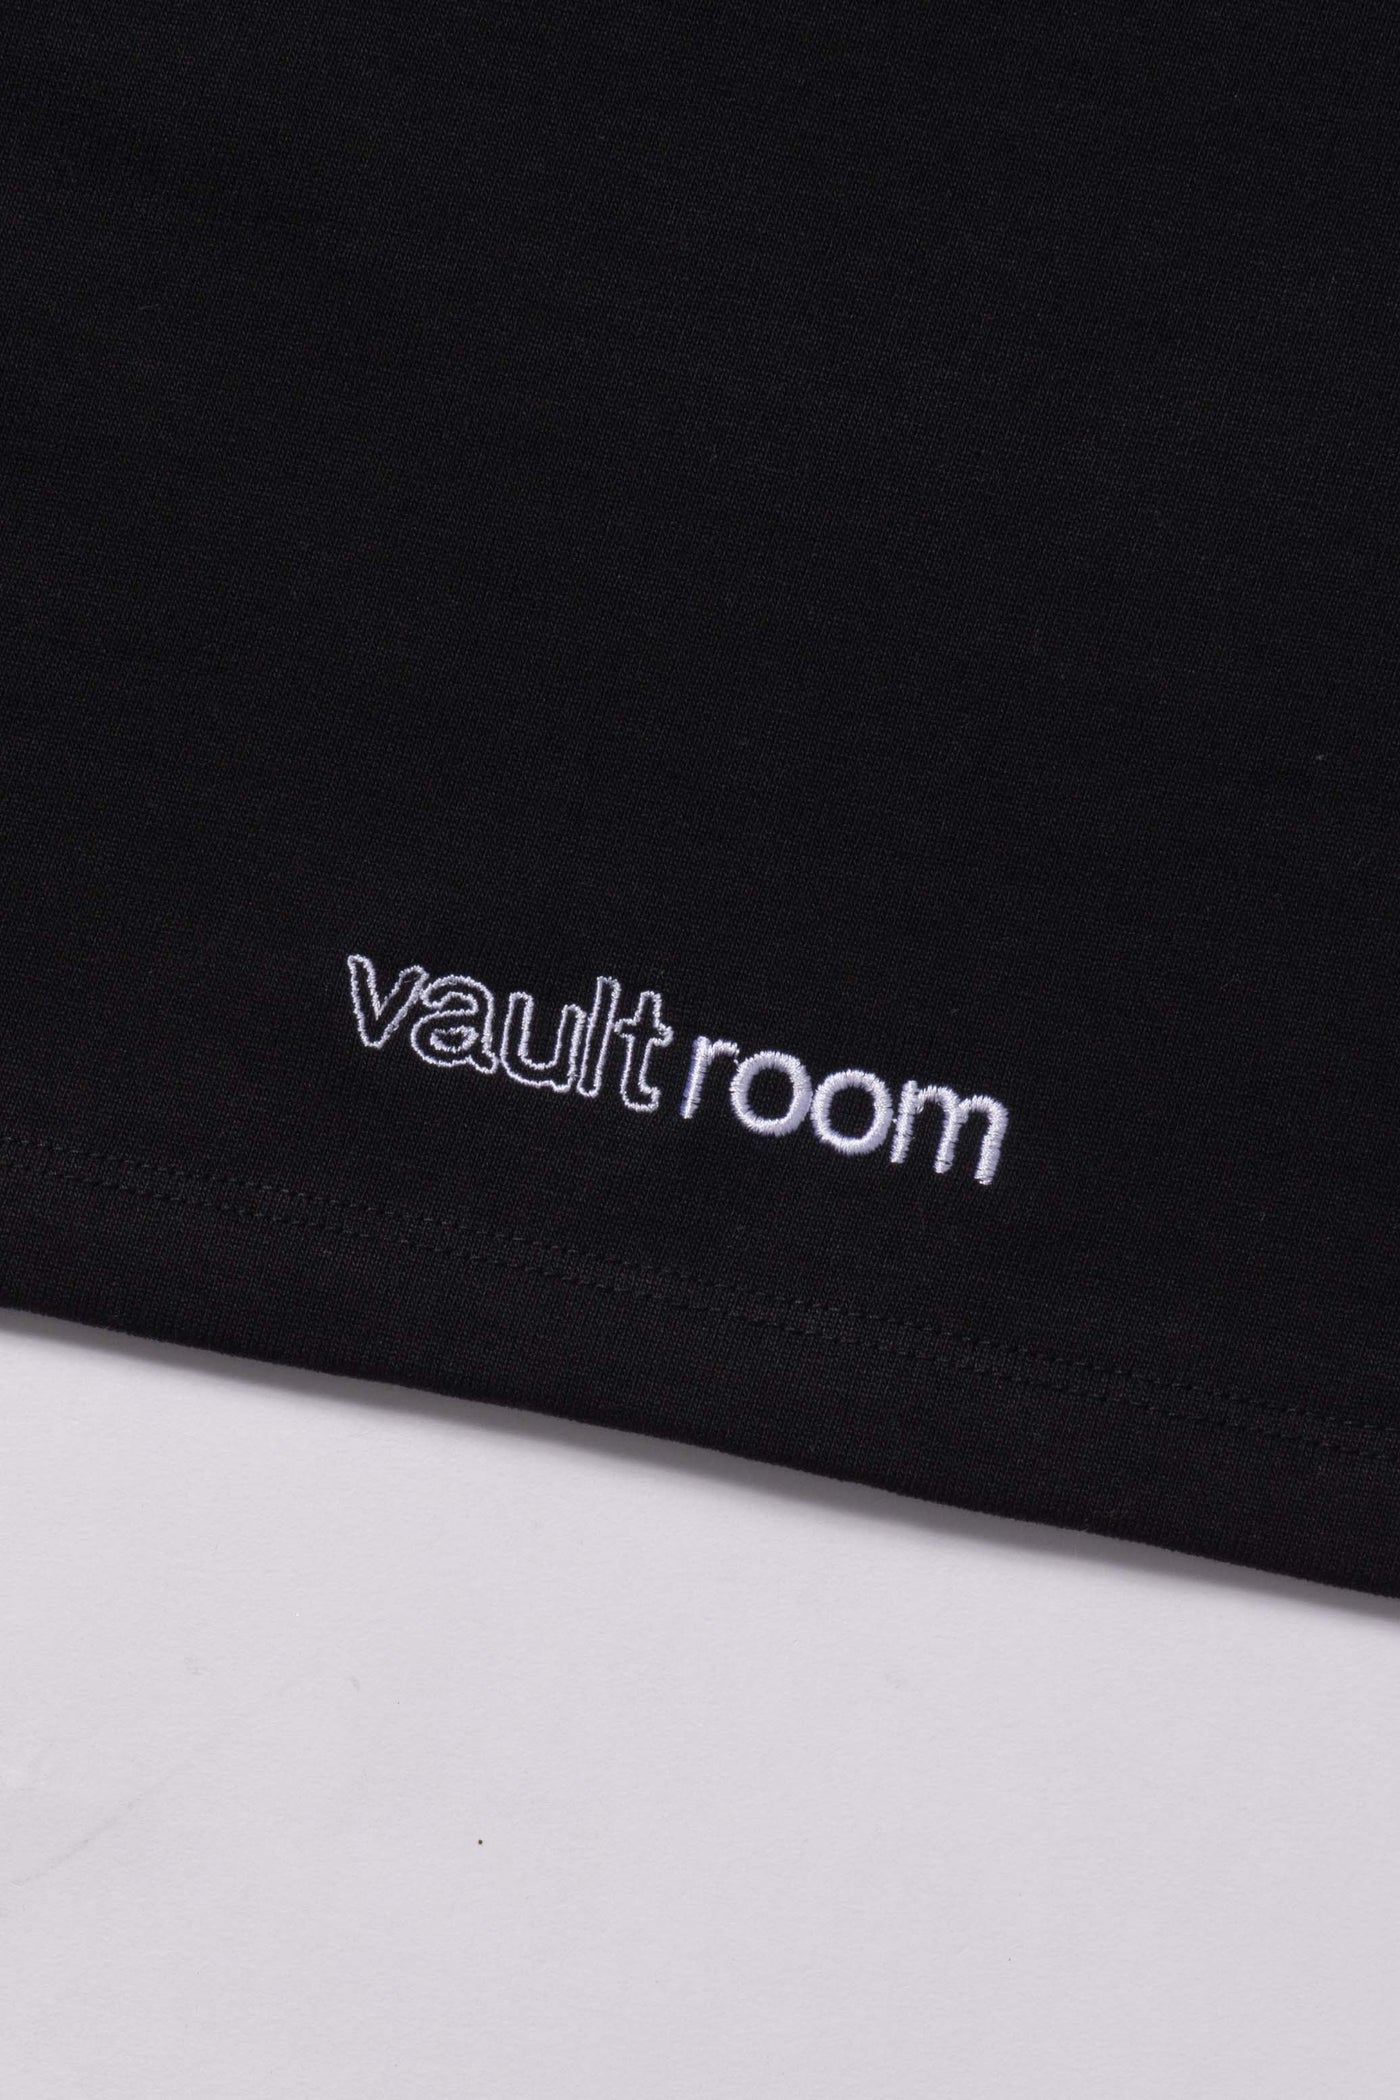 vaultroom LOGO MINI CROPPED TEE / BLK